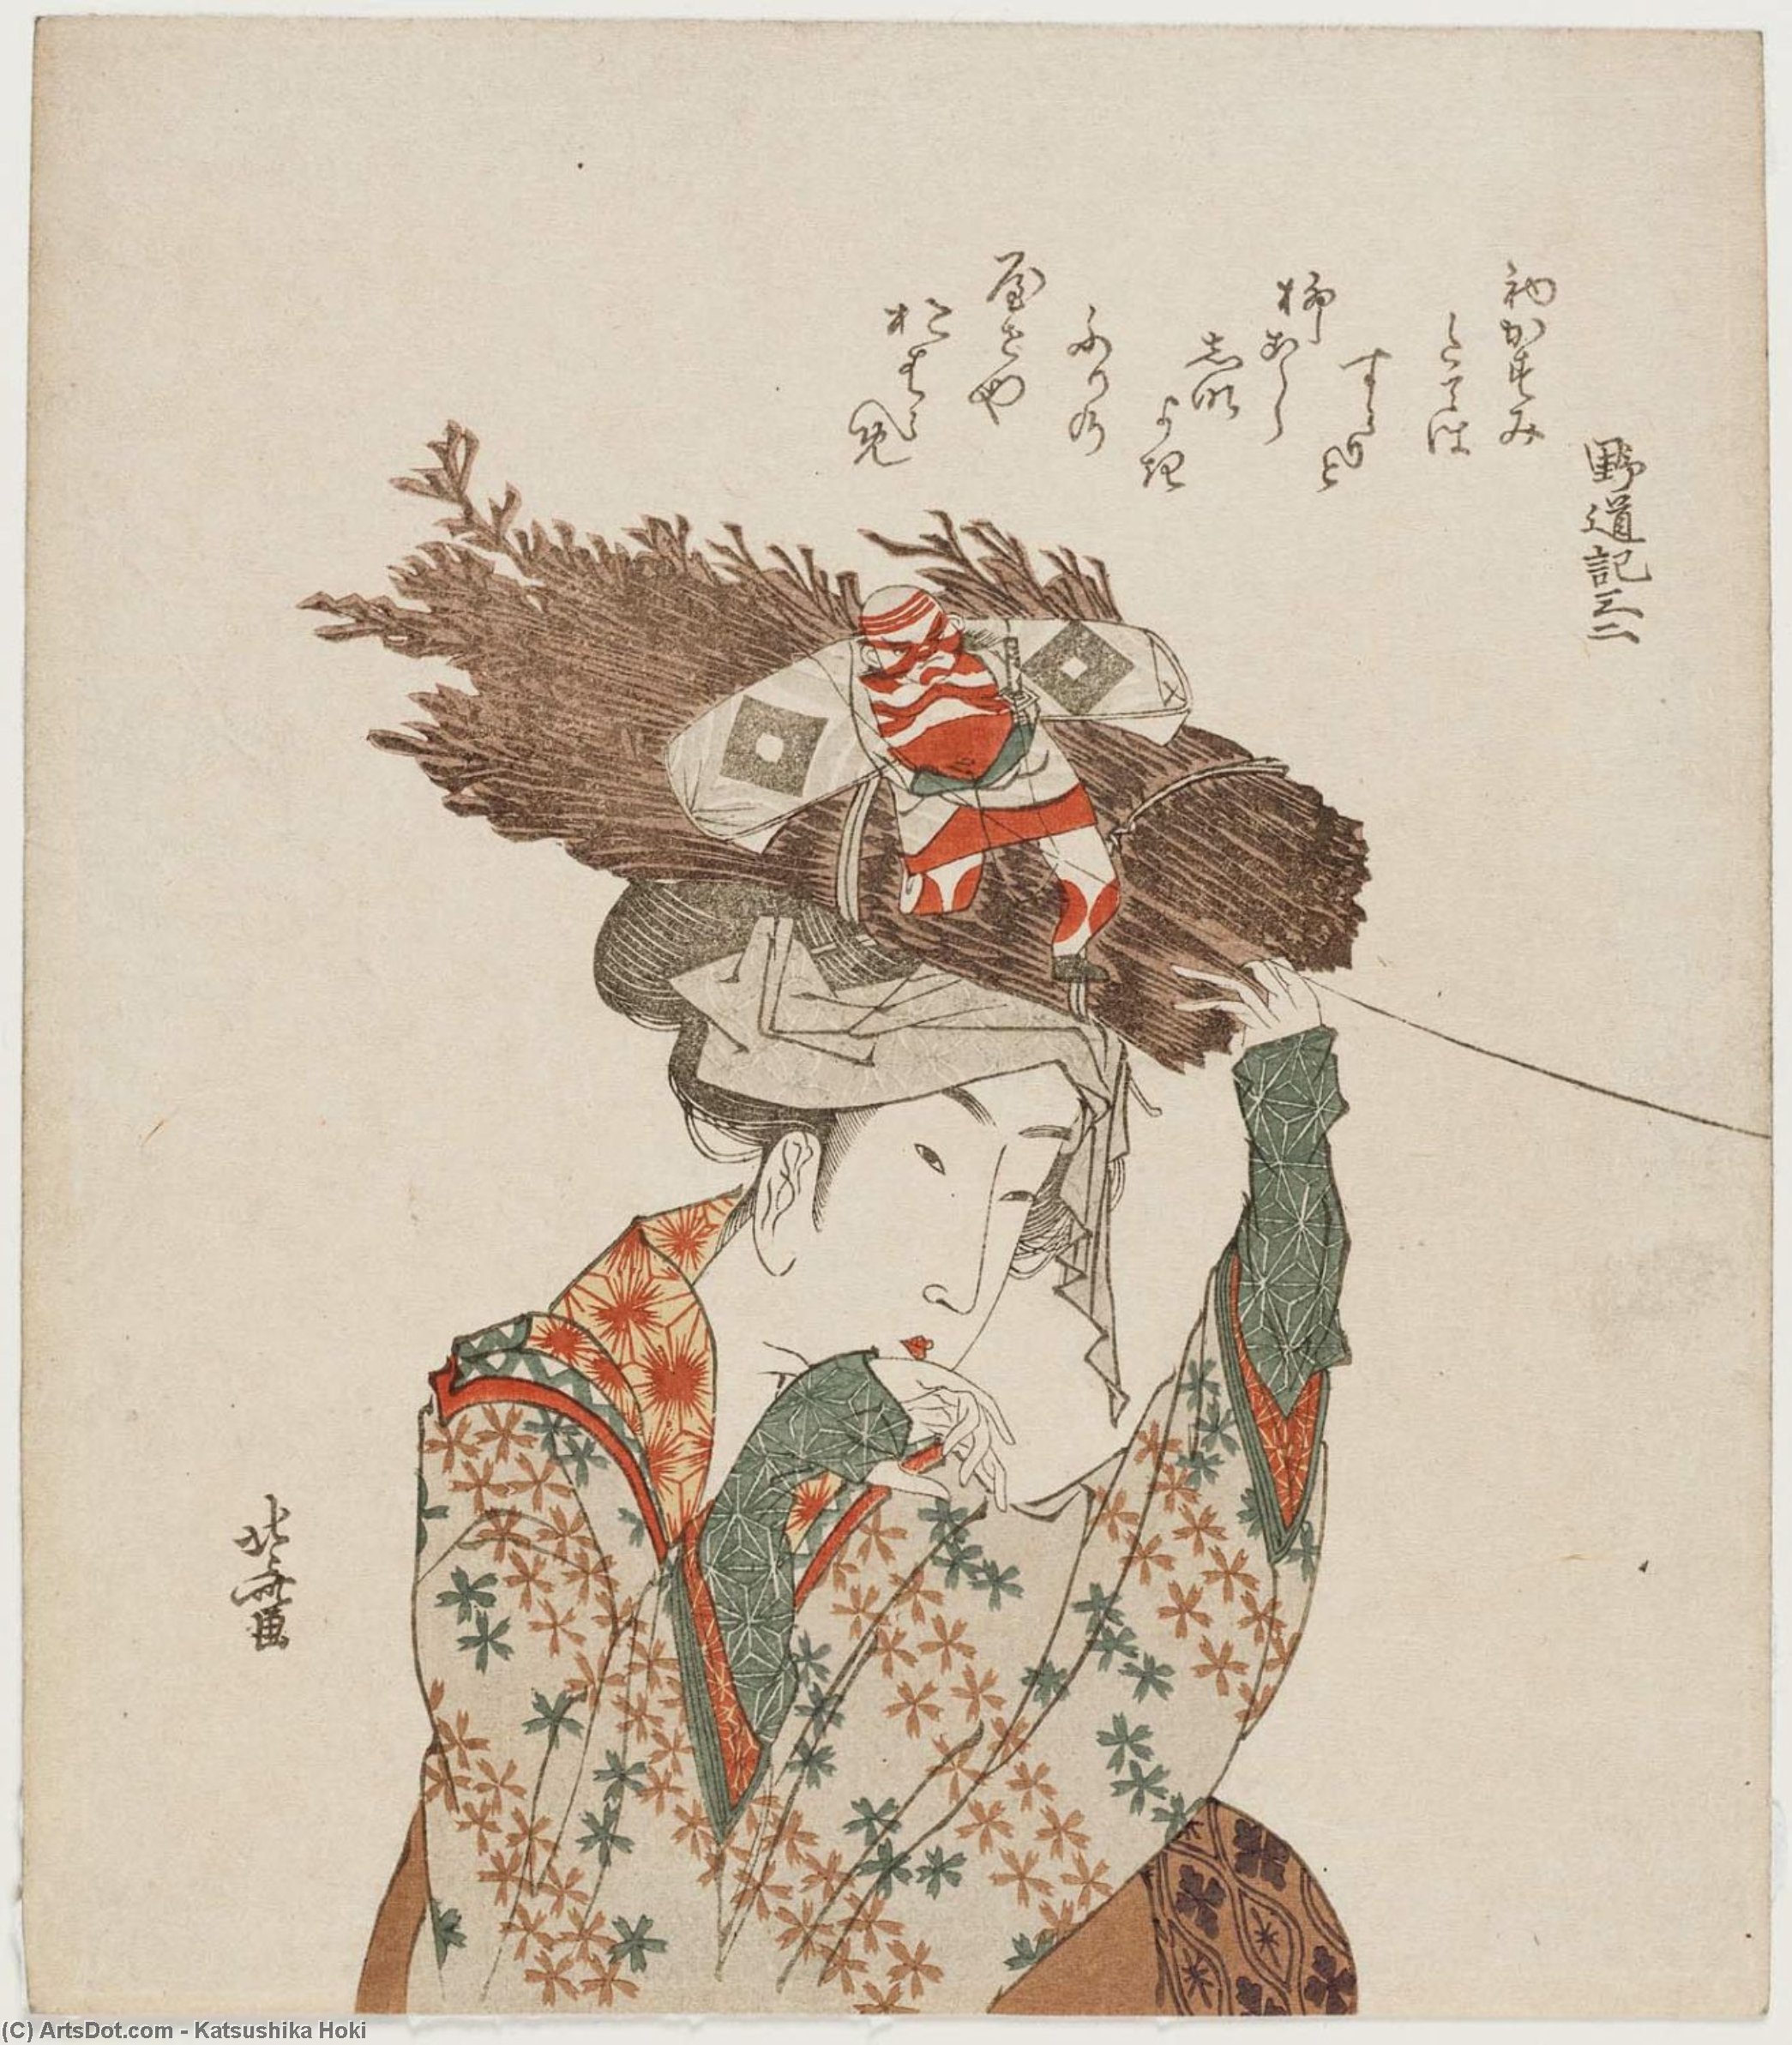 Order Oil Painting Replica Woman Of Ôhara With Firewood Bundle And Kite by Katsushika Hokusai (1760-1849, Japan) | ArtsDot.com